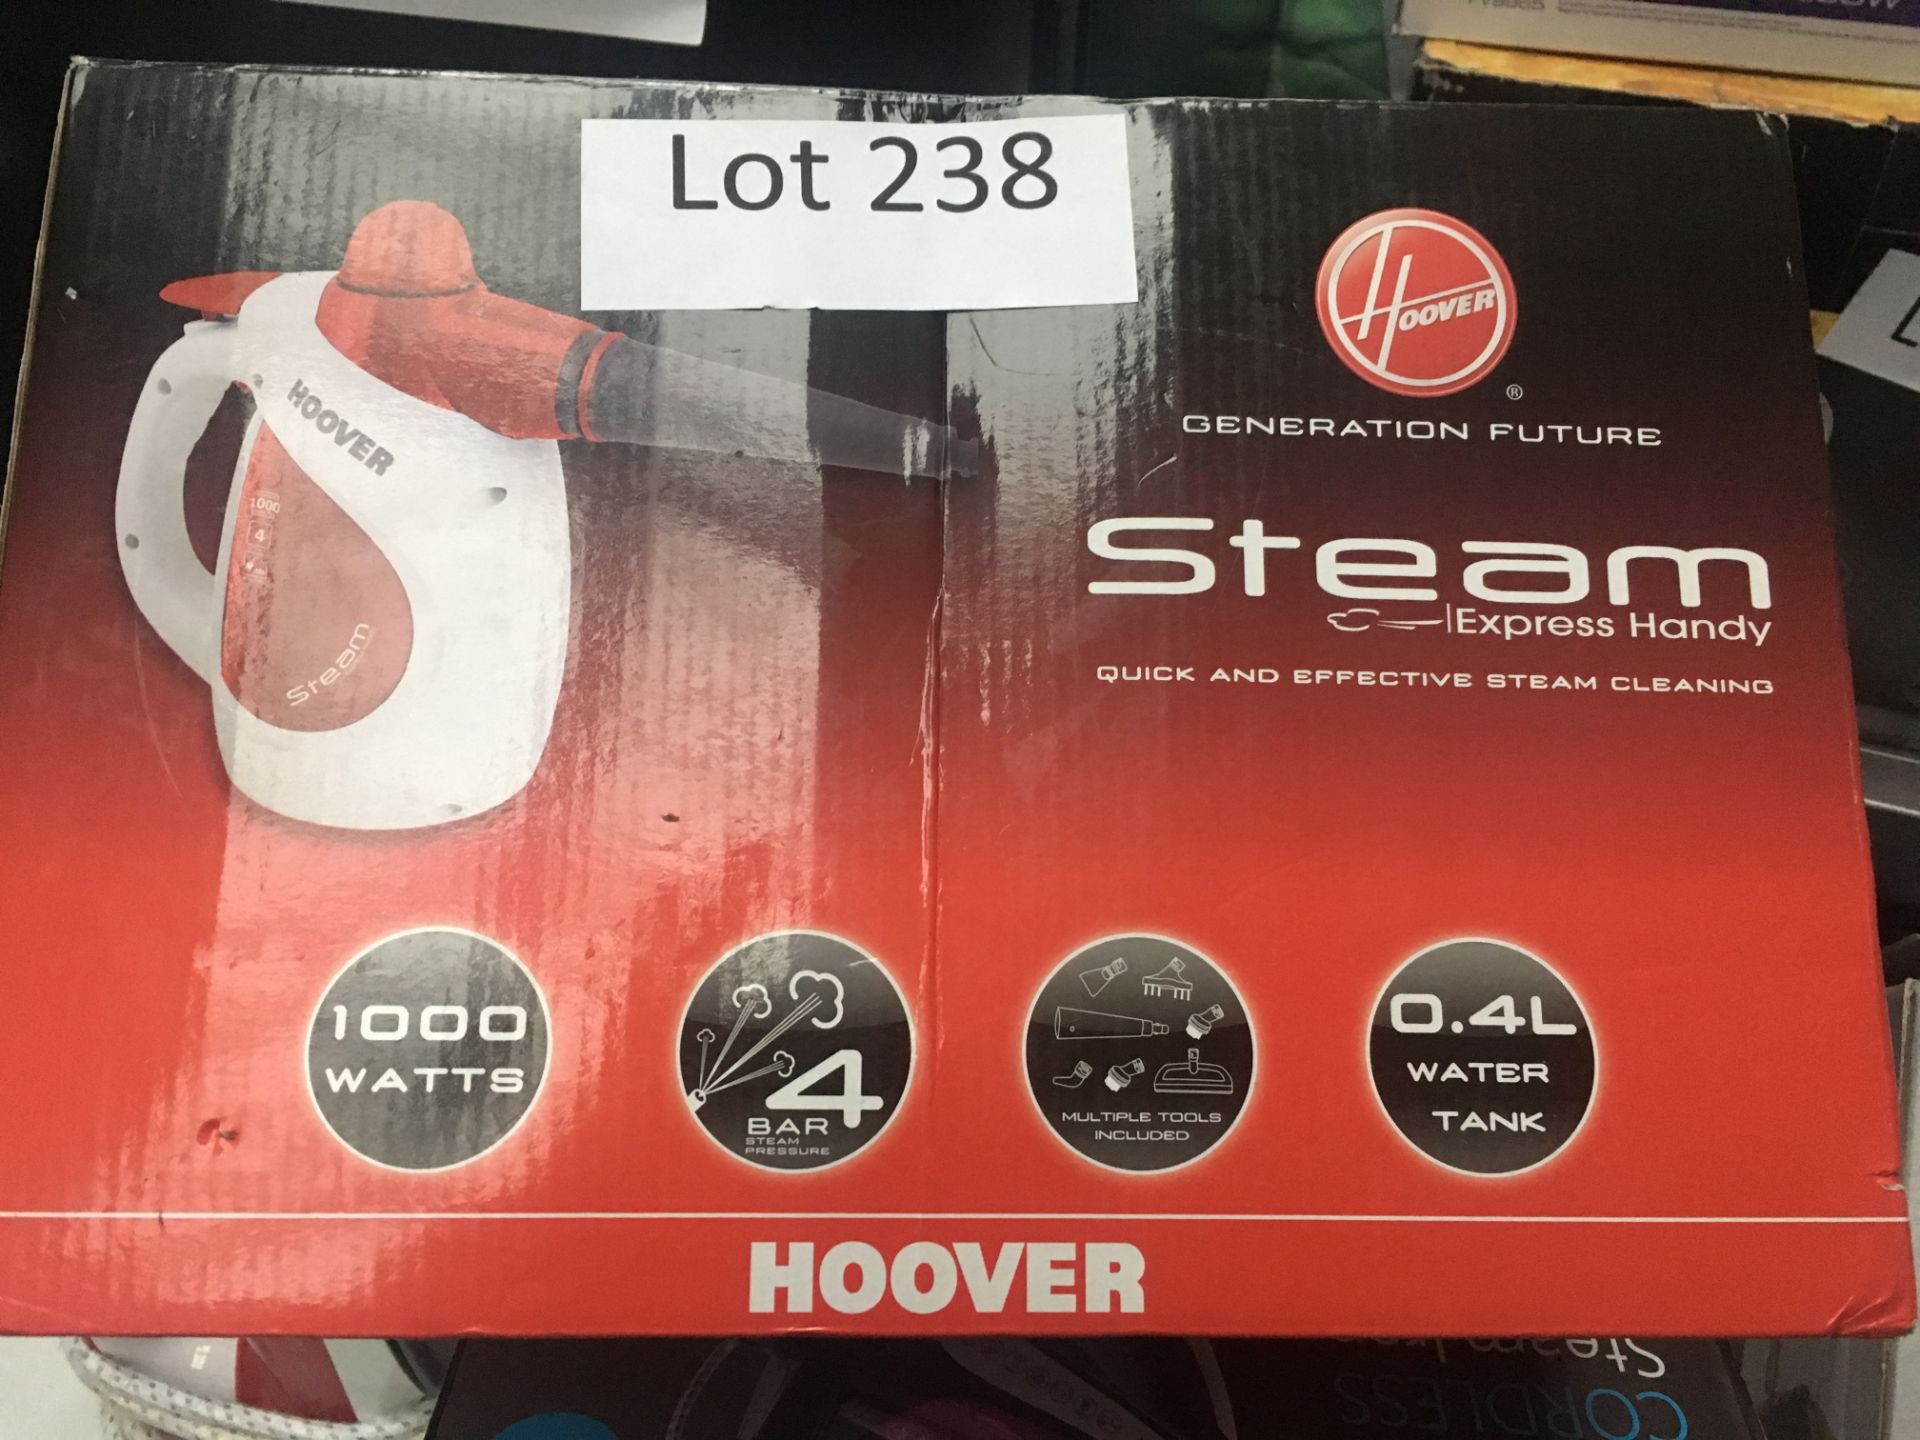 "Hoover" 100w hand held steam cleaner. Untested customer return.